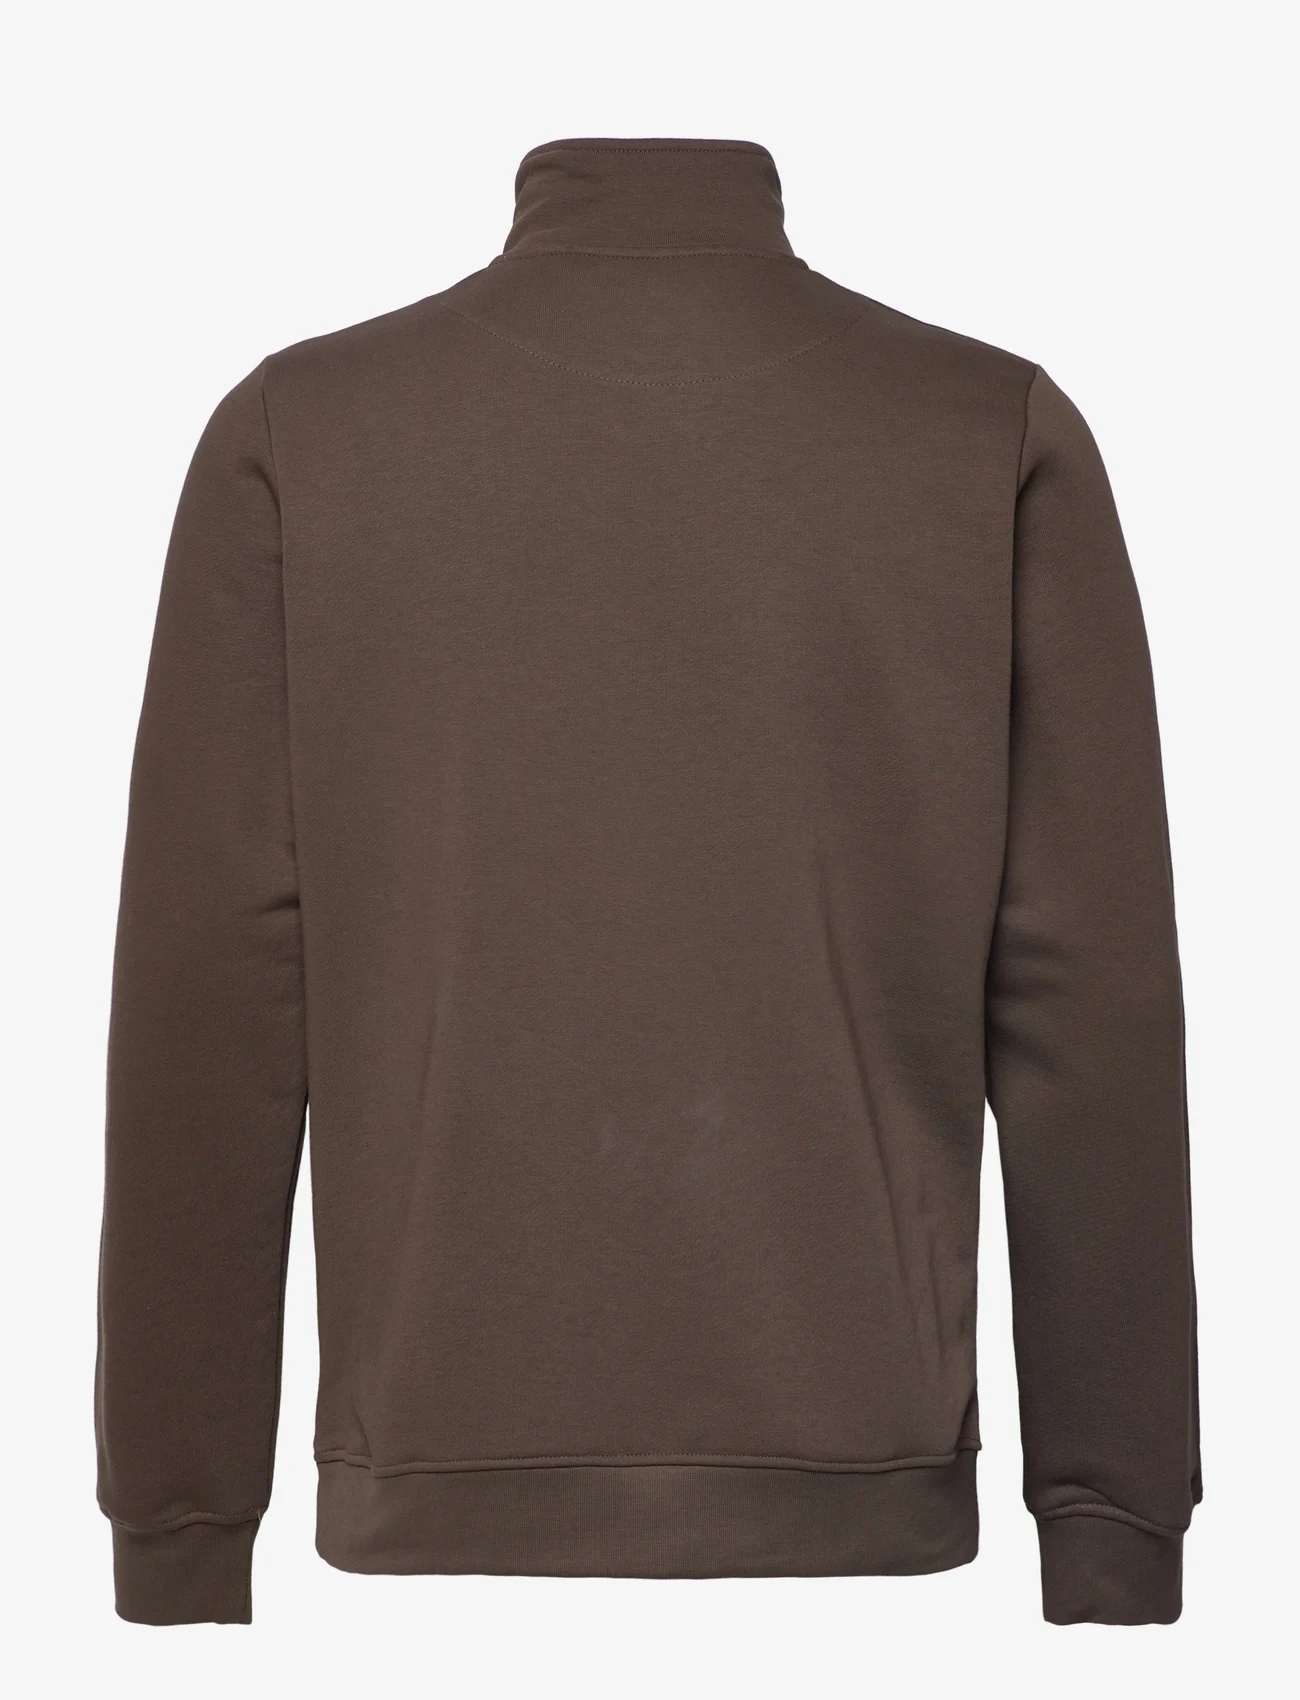 Clean Cut Copenhagen - Basic Organic 1/2 Zip Sweat - sweatshirts - dark brown - 1